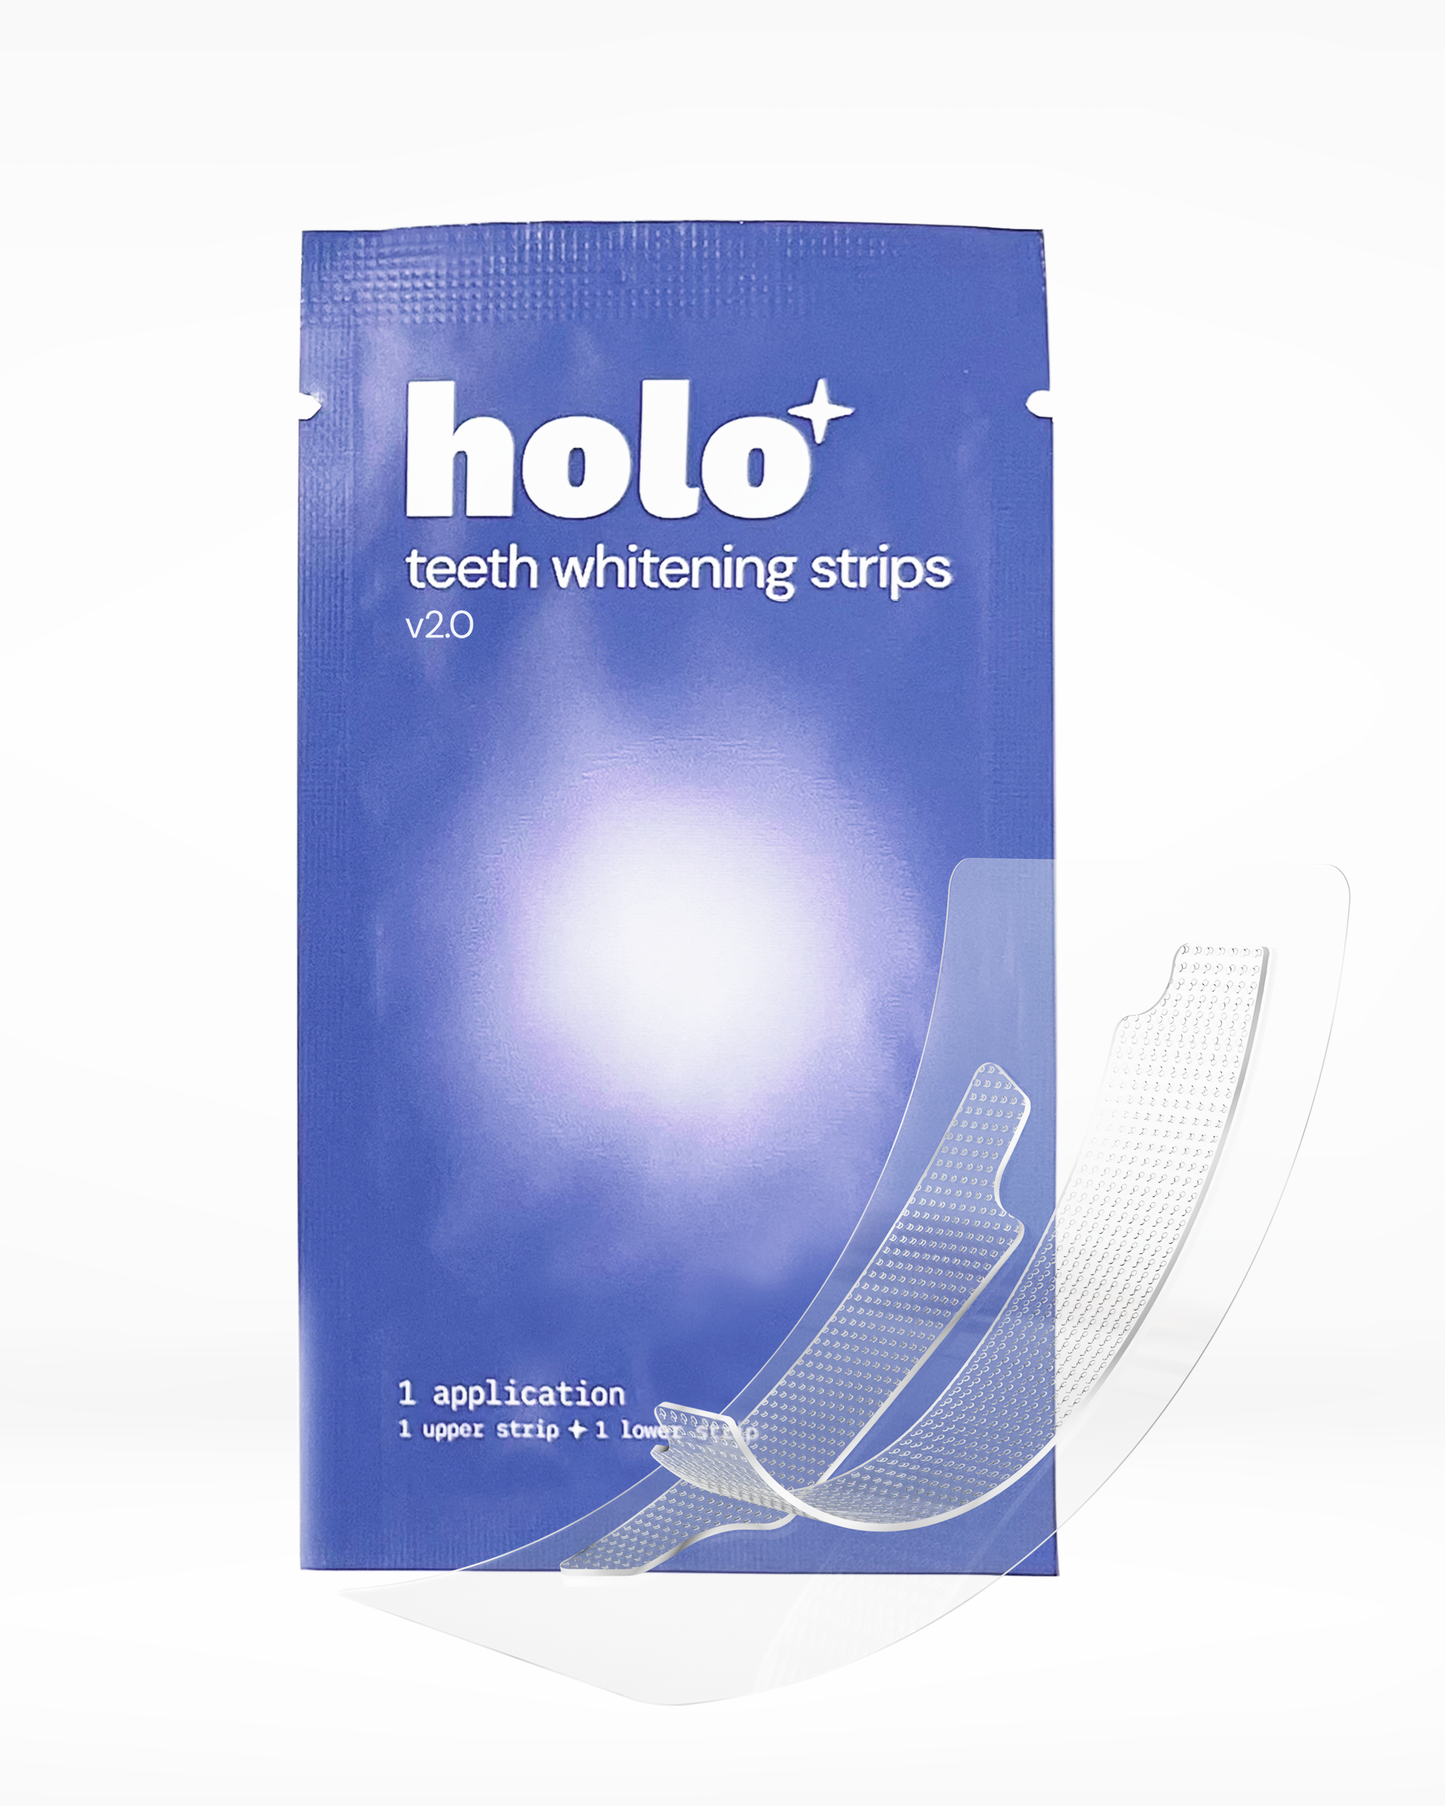 Holo Teeth Whitening Strips v2.0 - Holo